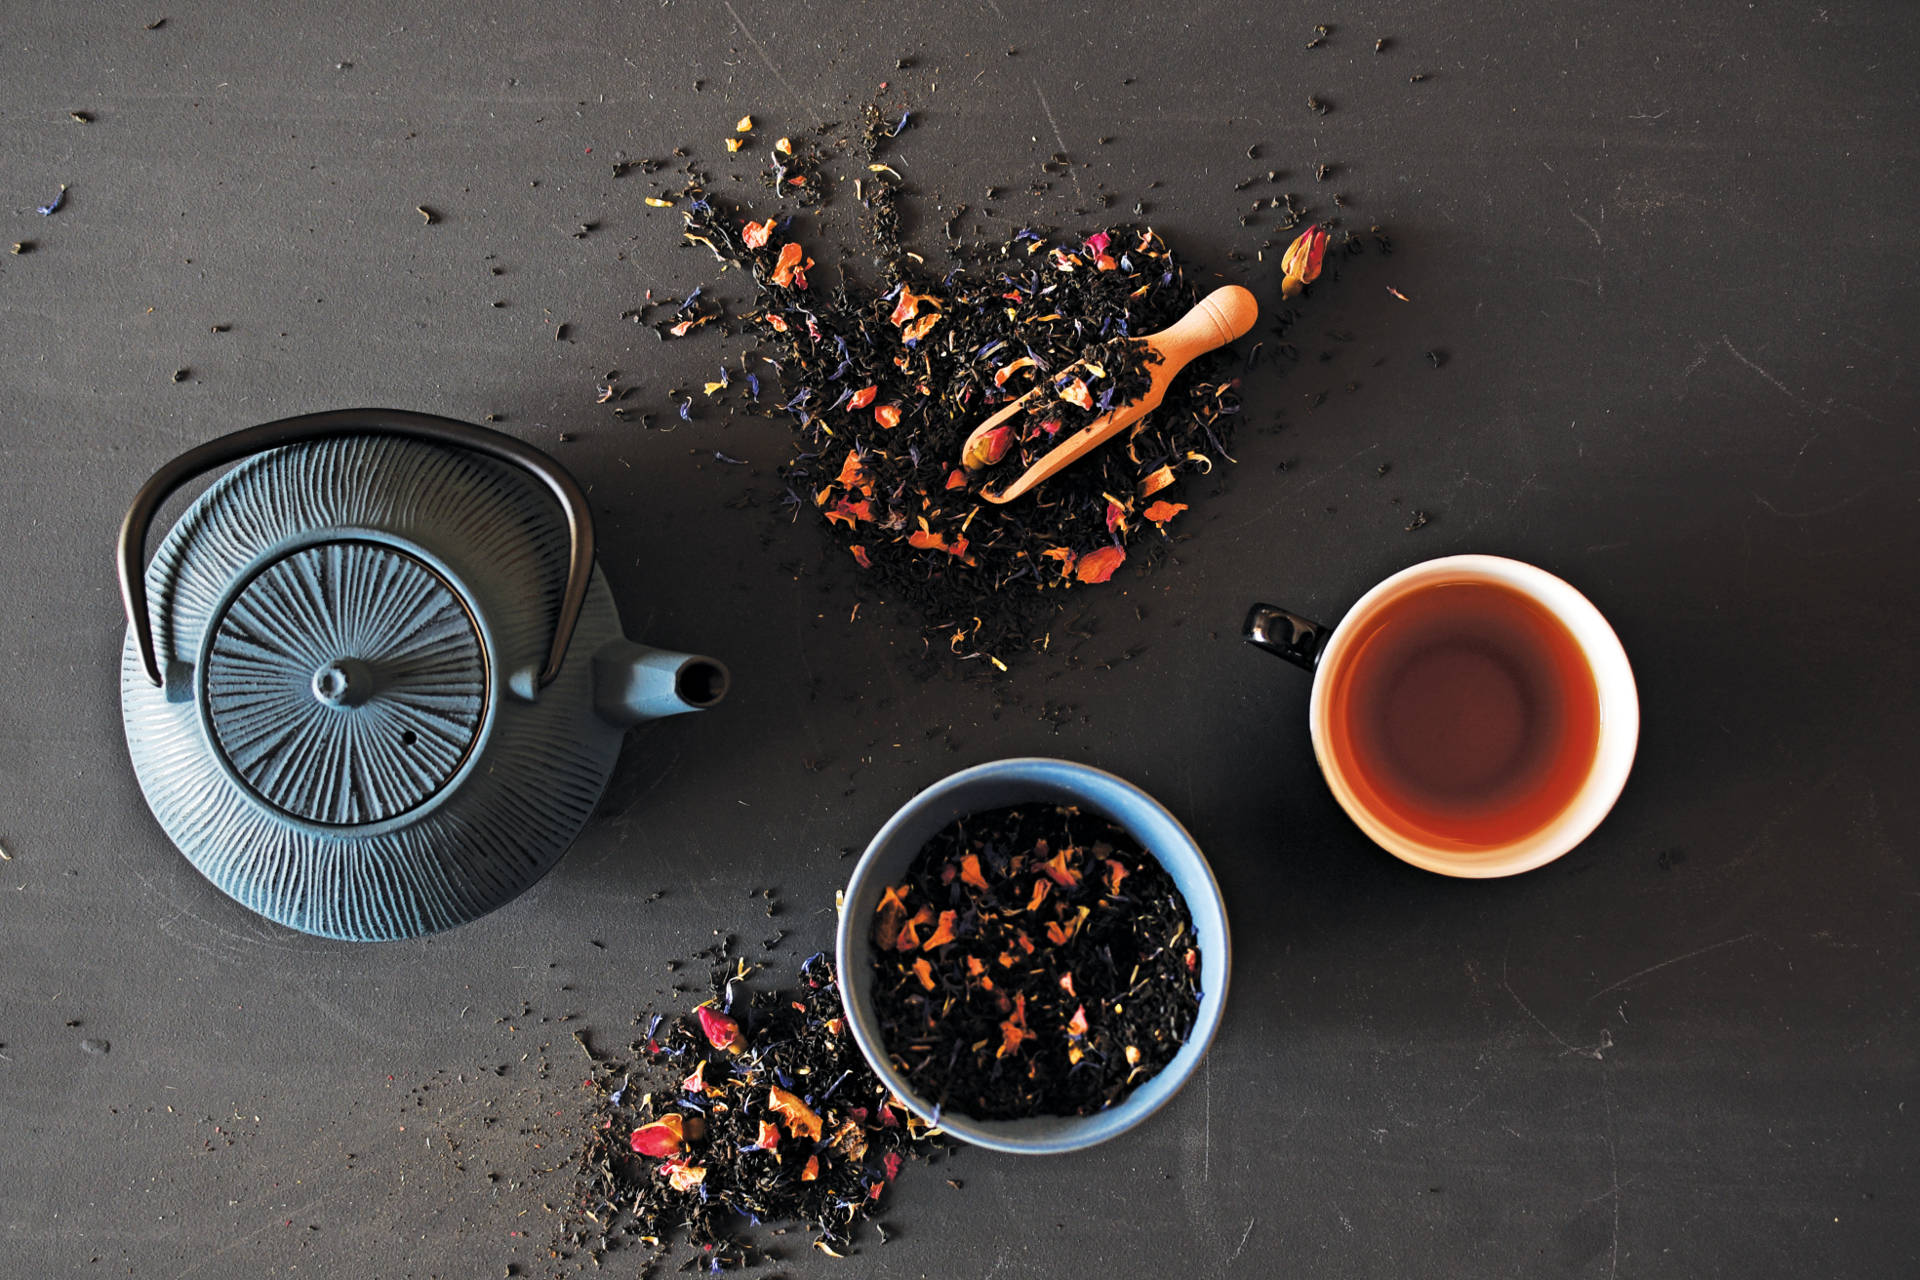 Jillys Fine Leaf Tea with ceramic teapot and teacup